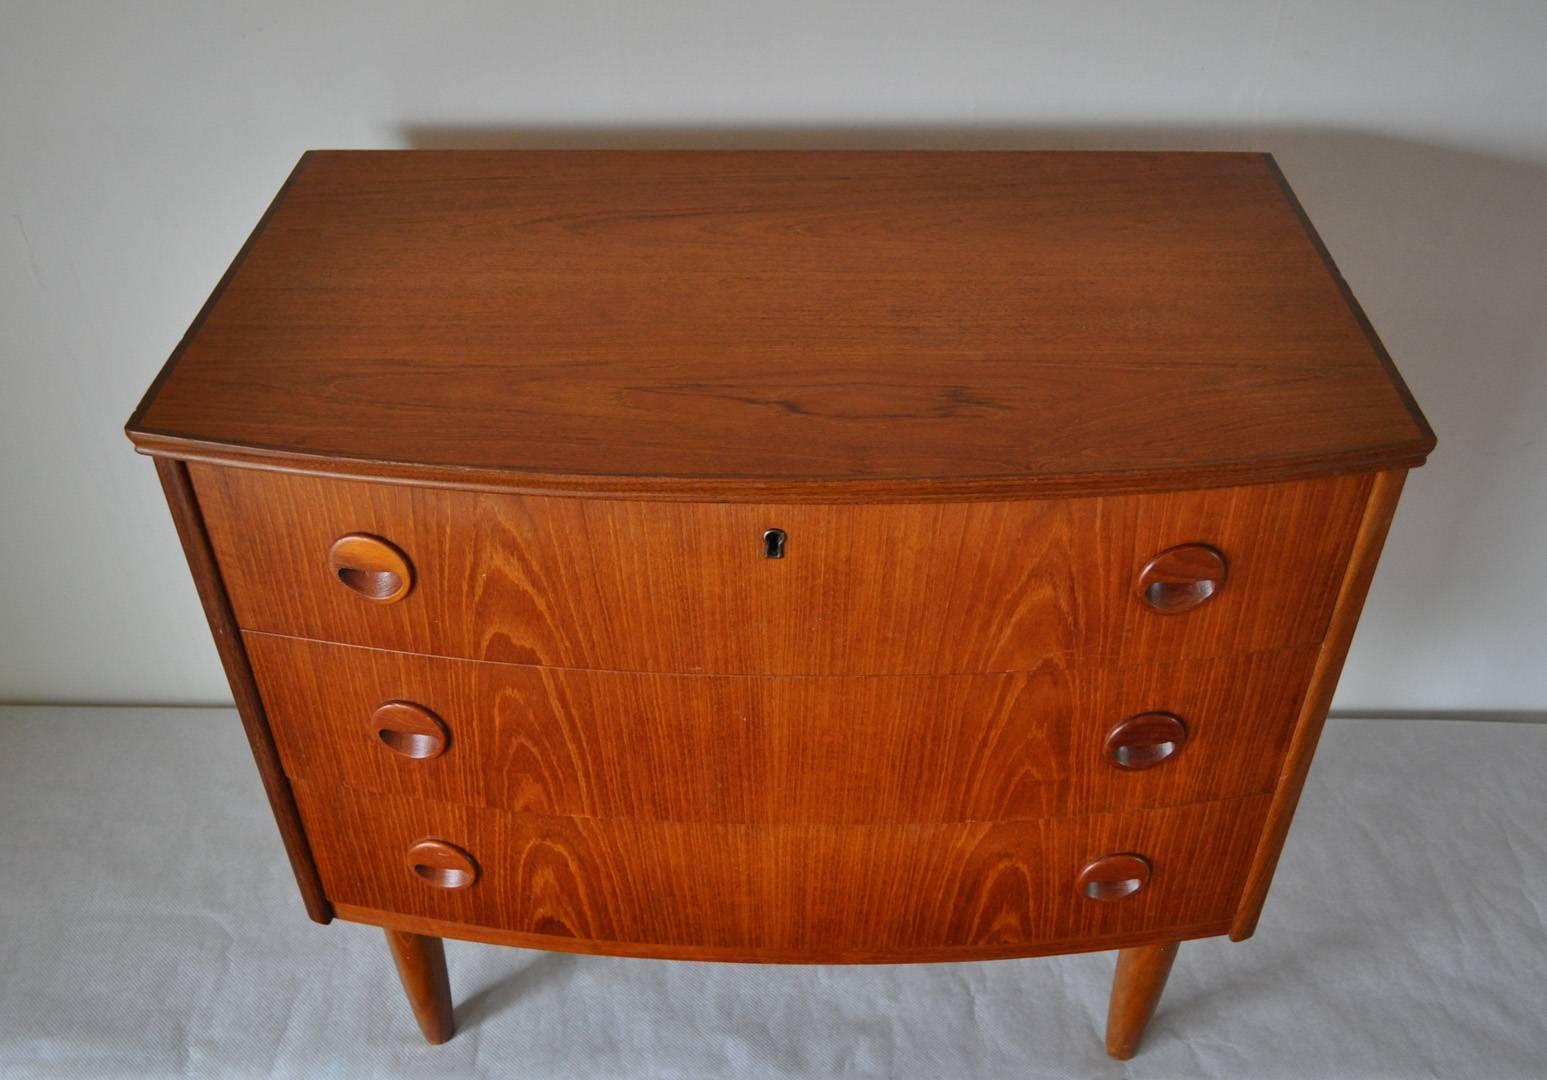 Oak Danish Modern chest of drawers in teak veneer with three drawers